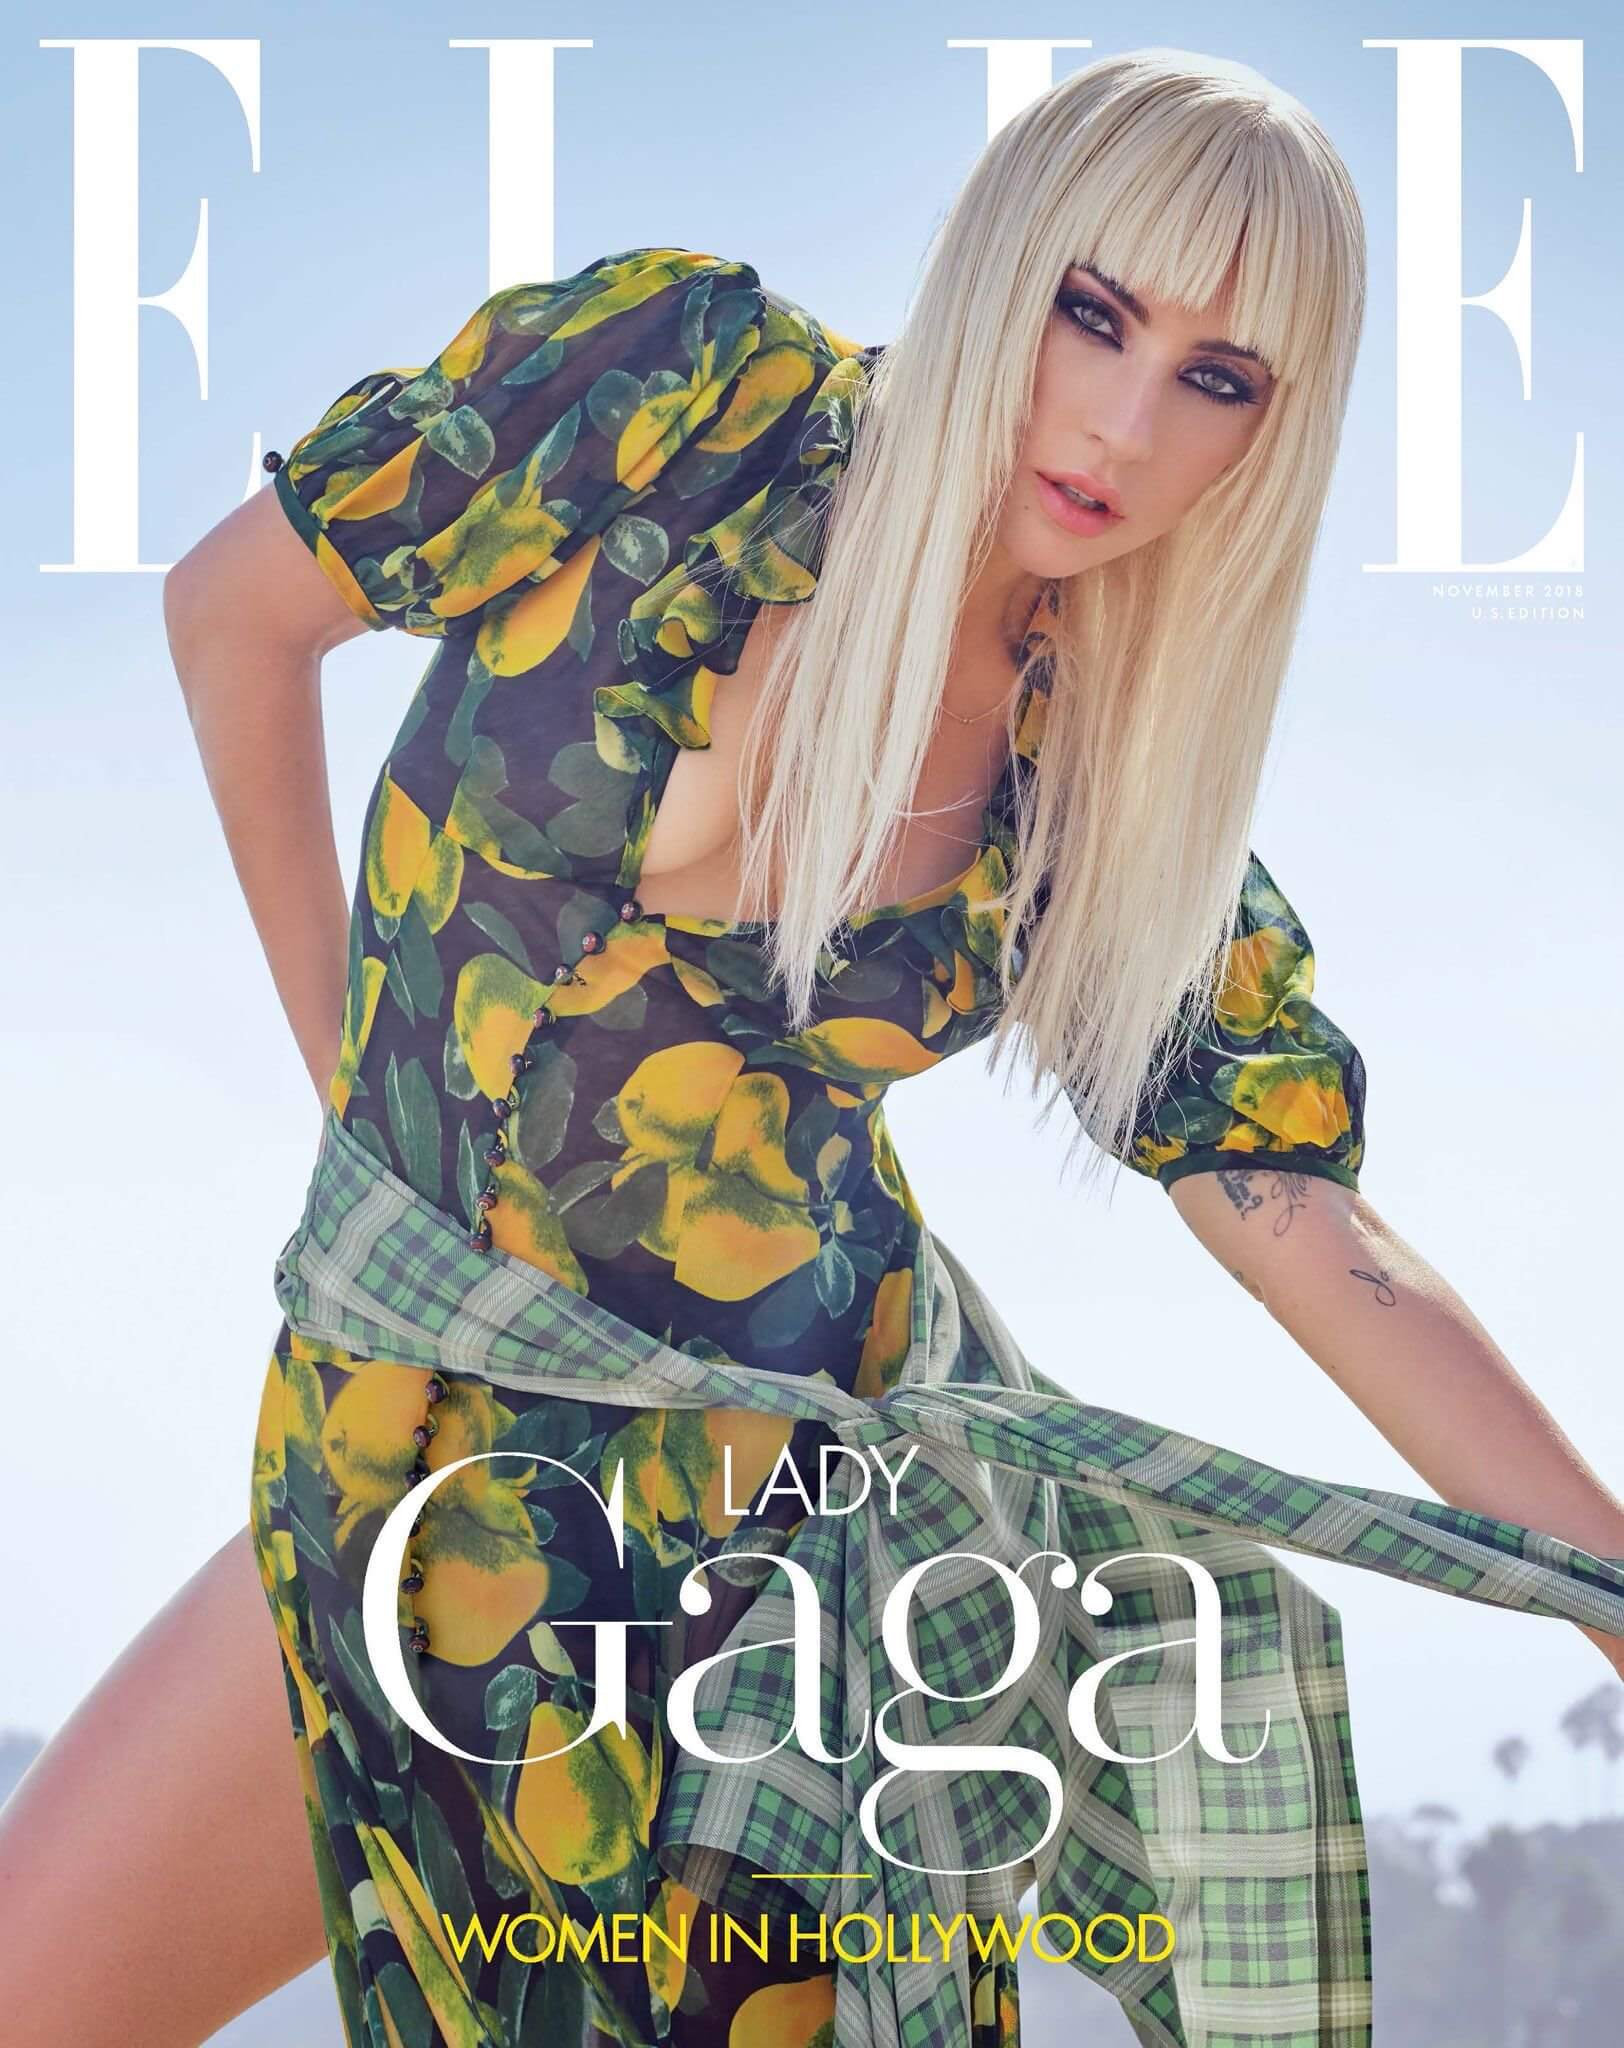 Lady Gaga Cover for Elle (November 2019)